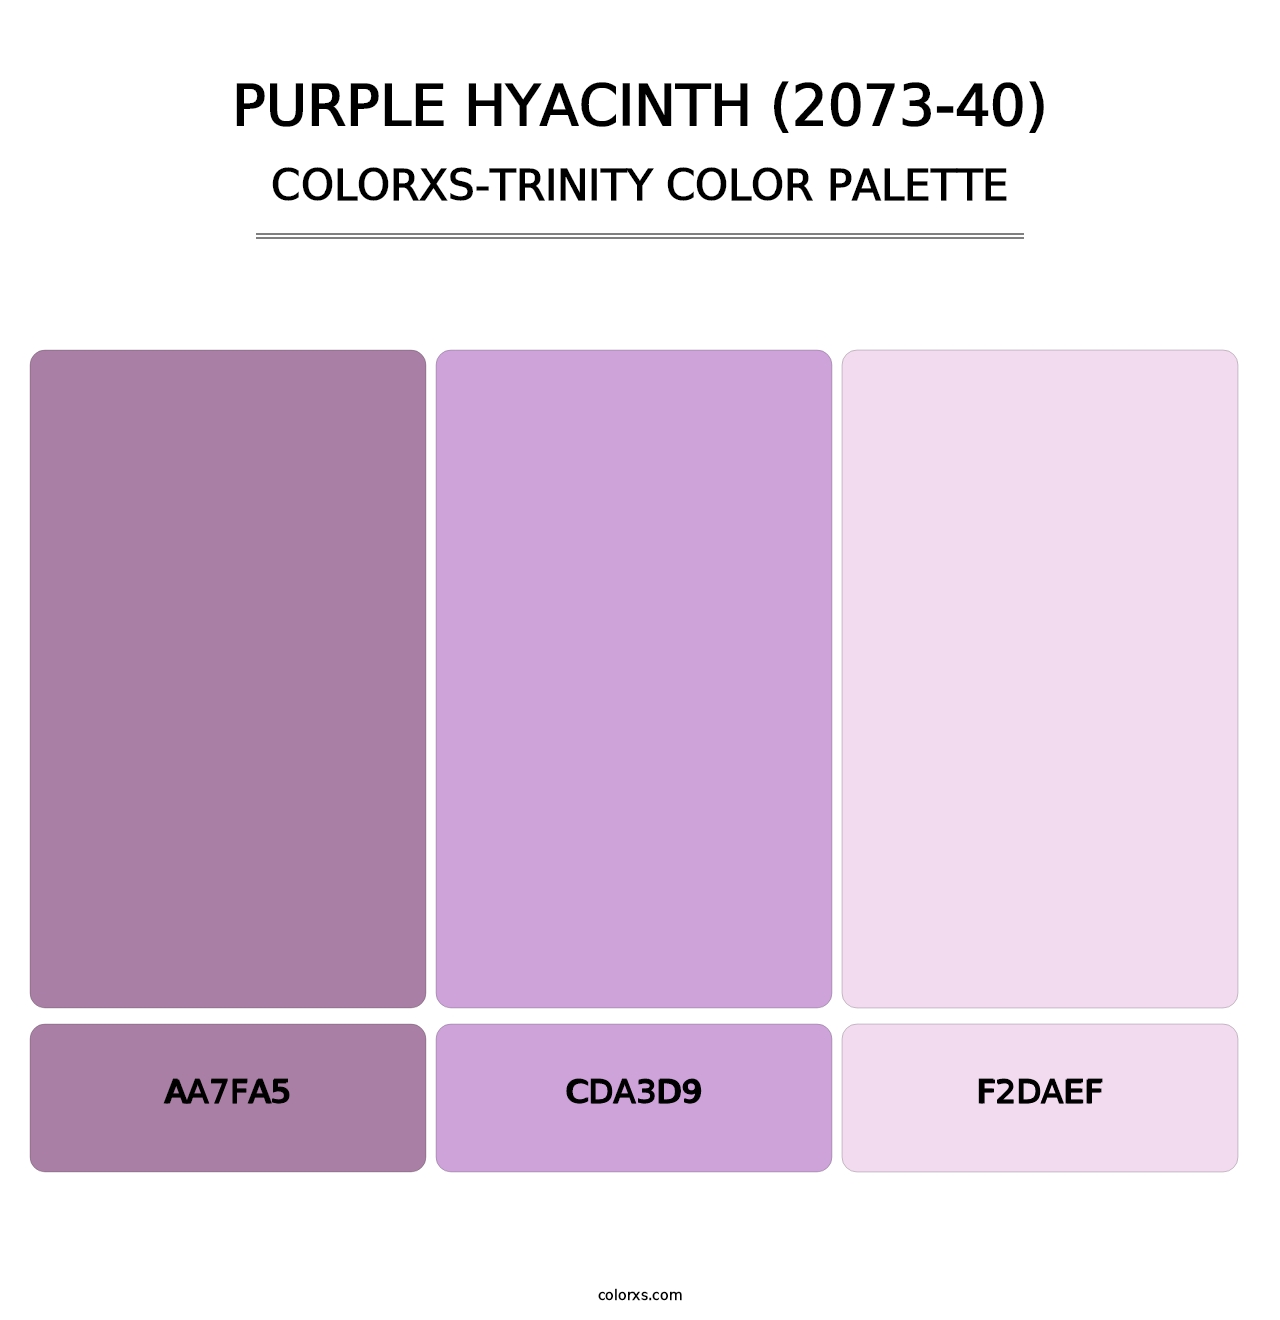 Purple Hyacinth (2073-40) - Colorxs Trinity Palette